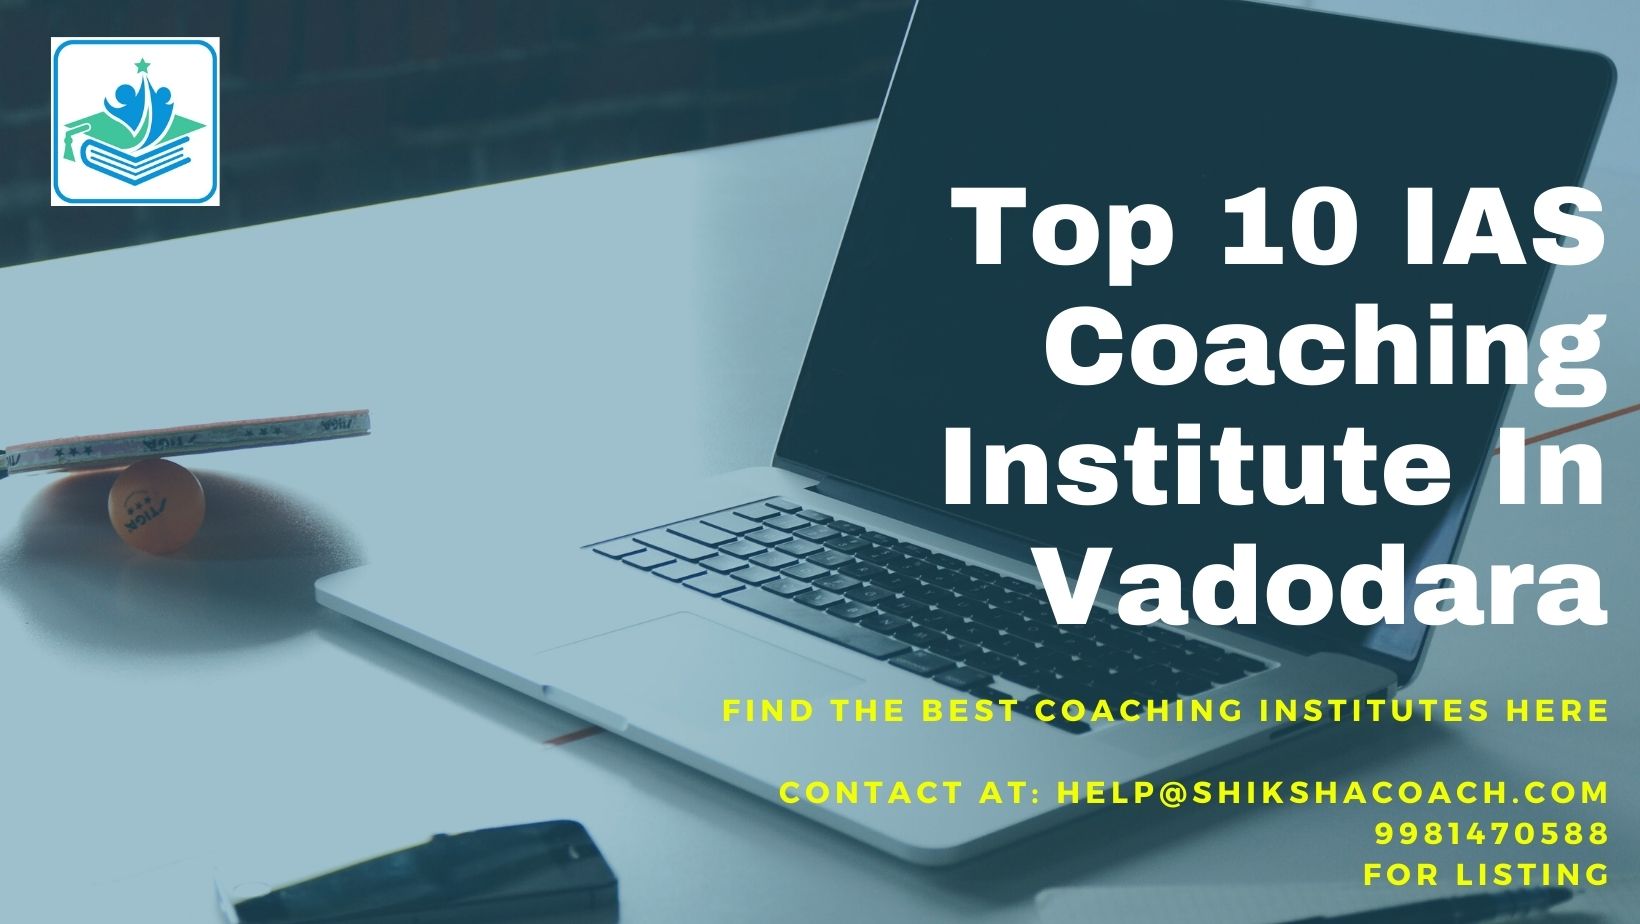 IAS Coaching in Vadodara